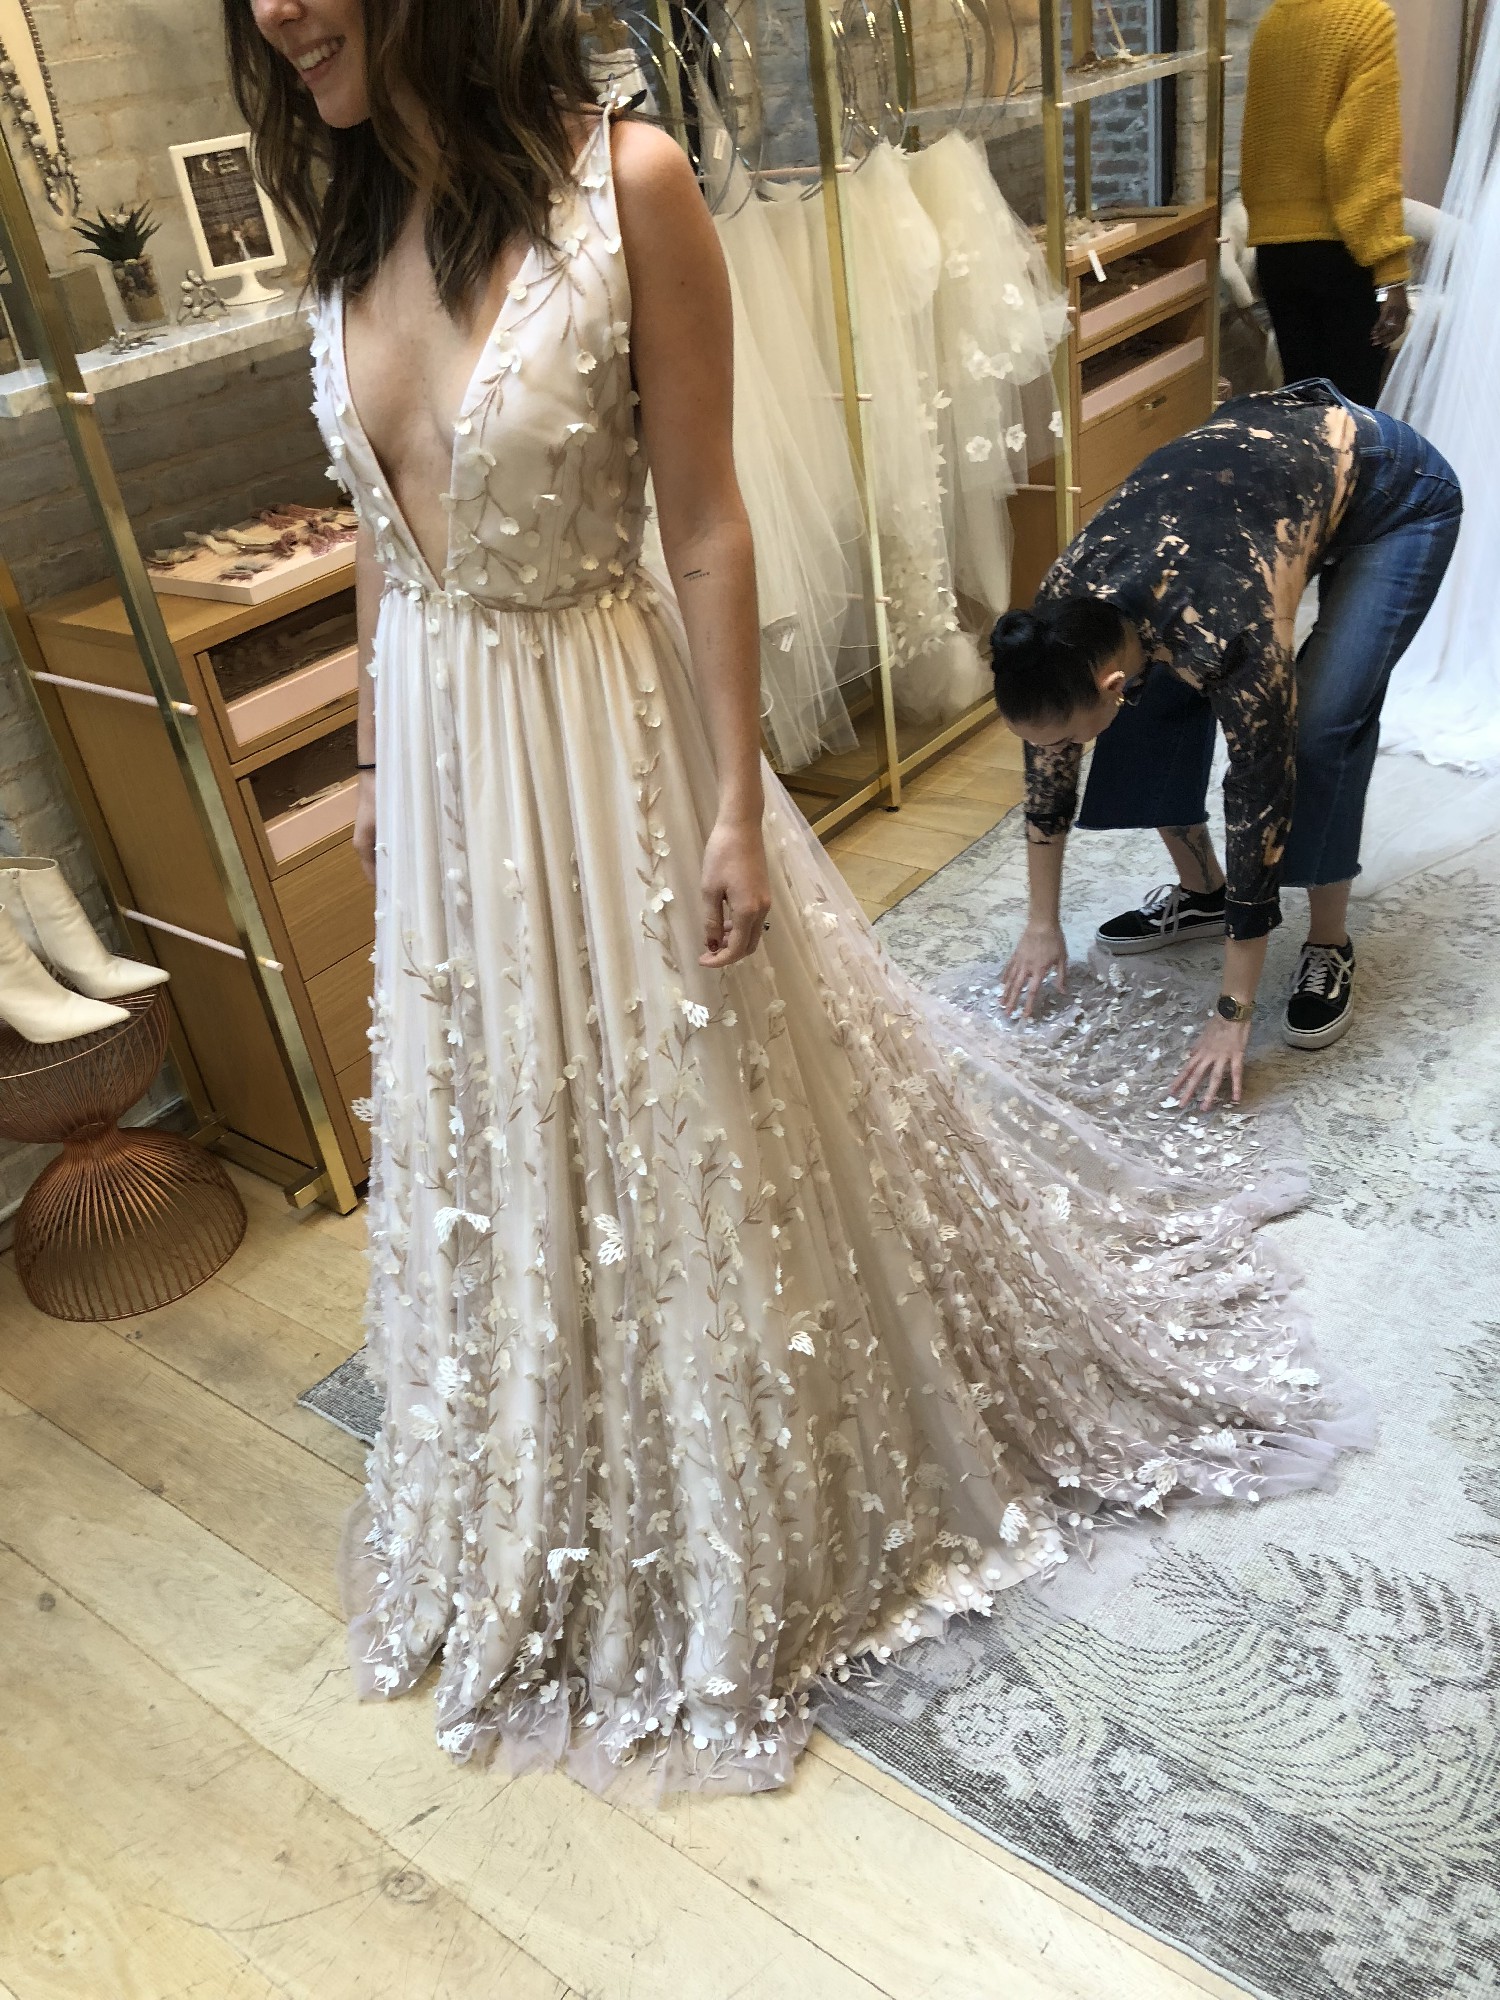 Alexandra Grecco Iris New Wedding Dress Save 28% - Stillwhite